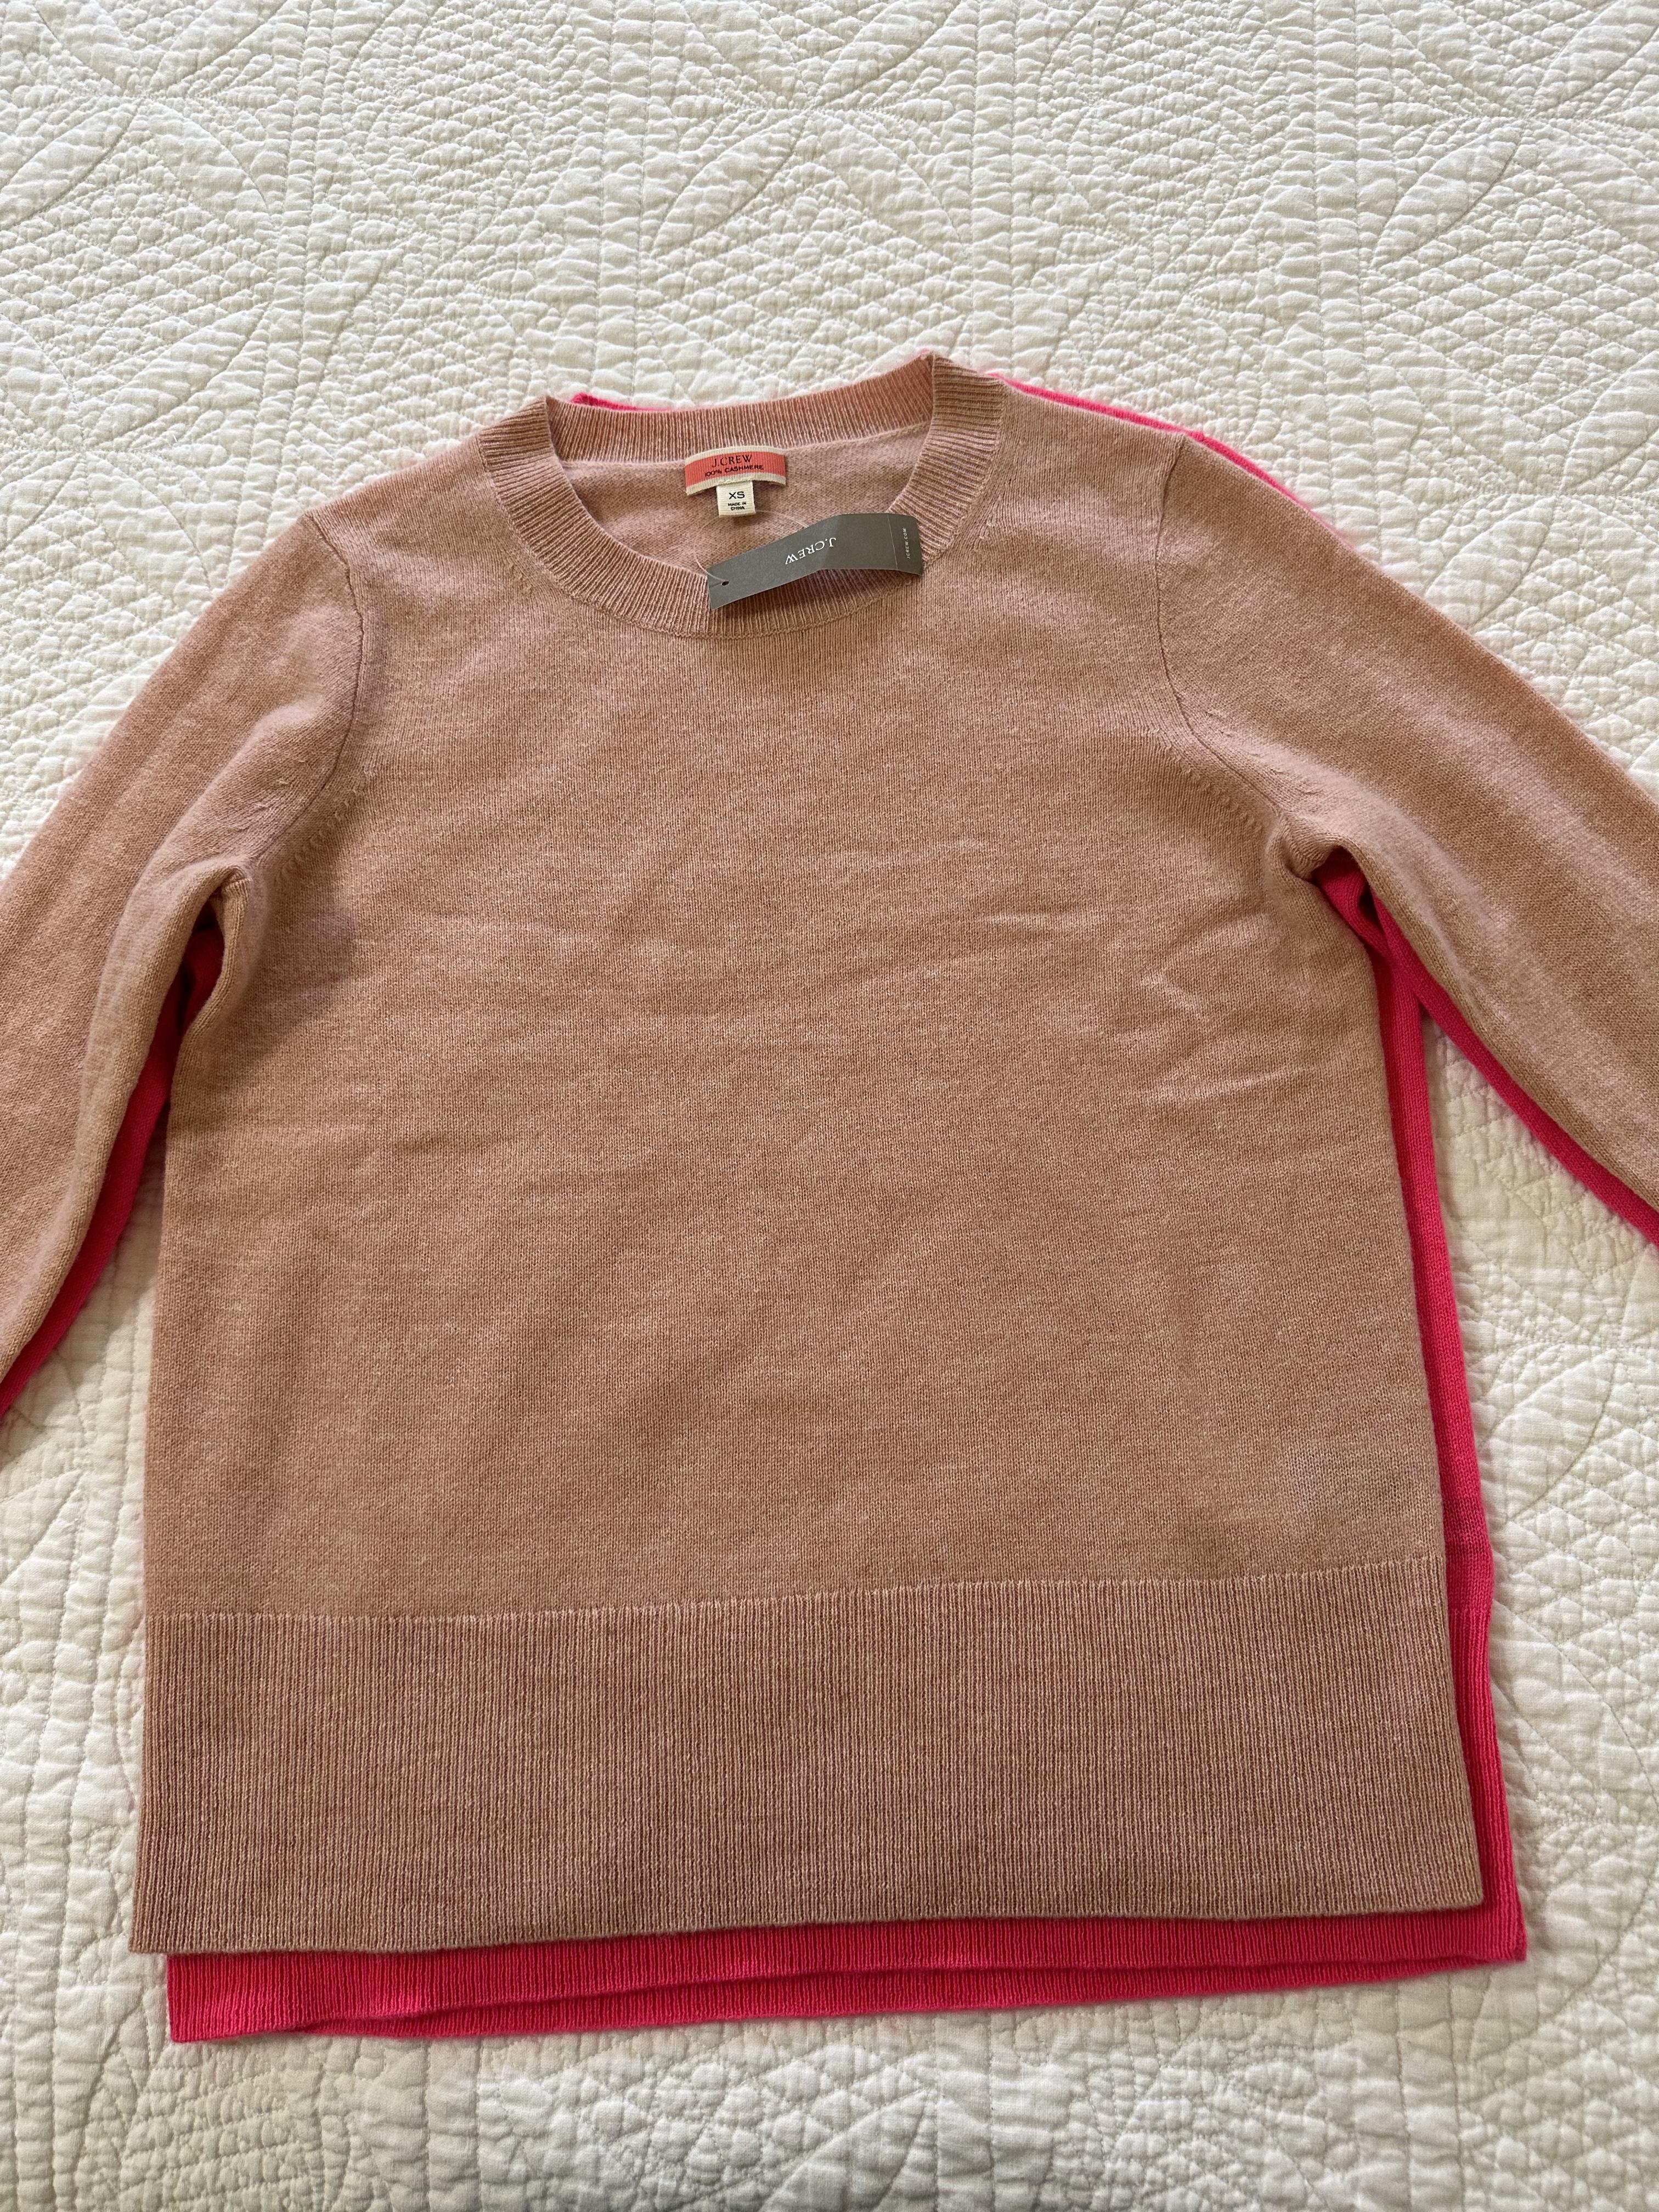 J.Crew Women's Cashmere Classic-Fit Crewneck Sweater (Size Medium)